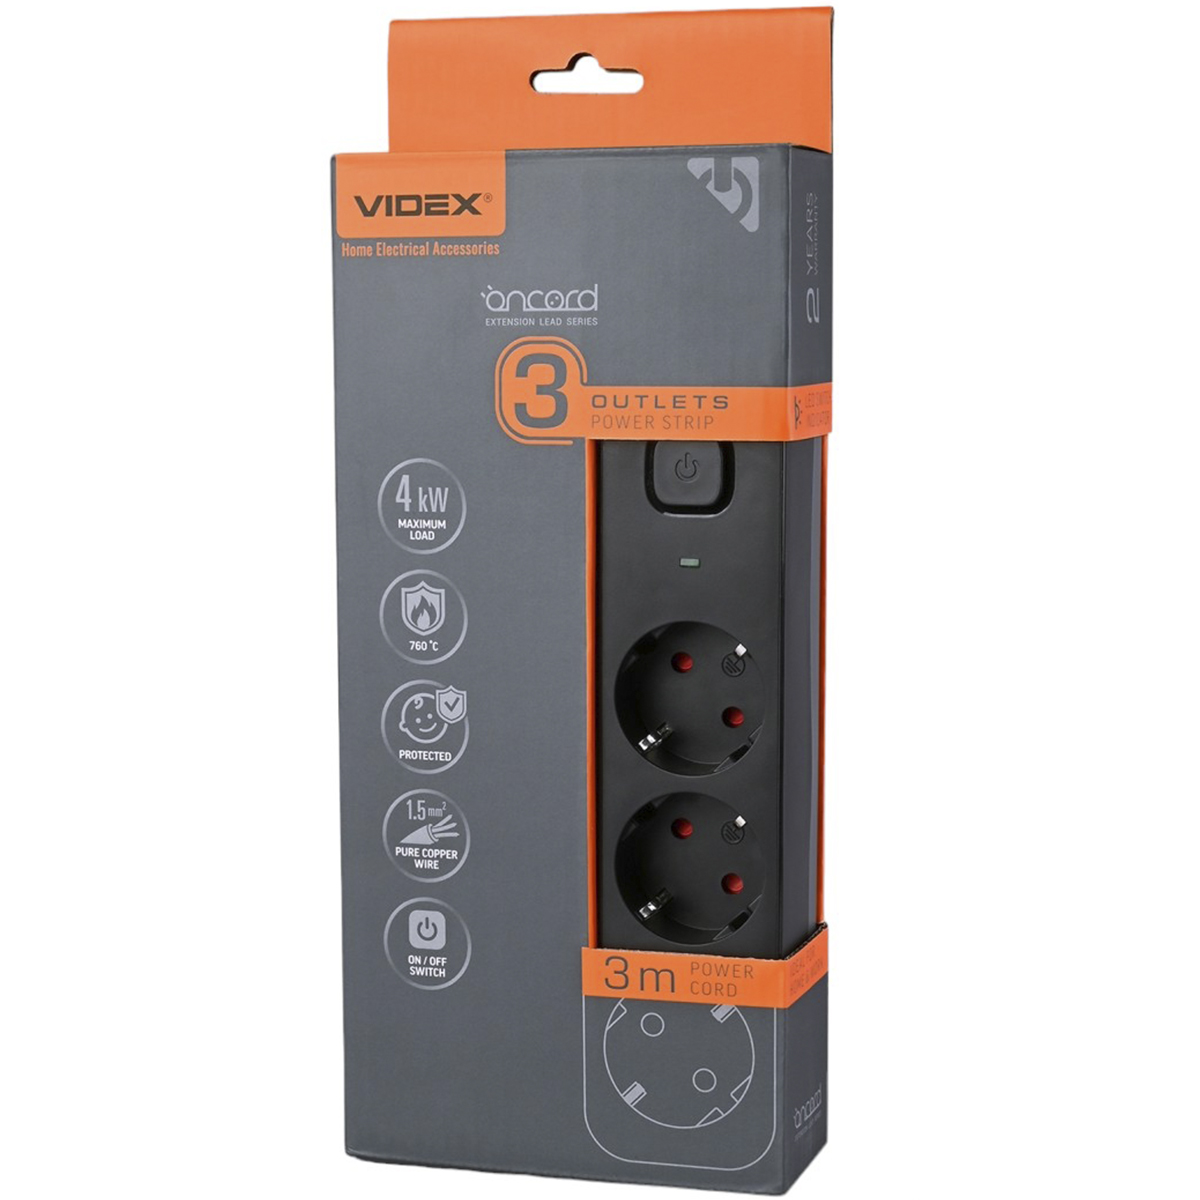 Сетевой удлинитель Videx Oncord с кнопкой с/з 3п 3 м 3x1.5 мм black (VF-PD33G-B) - фото 1